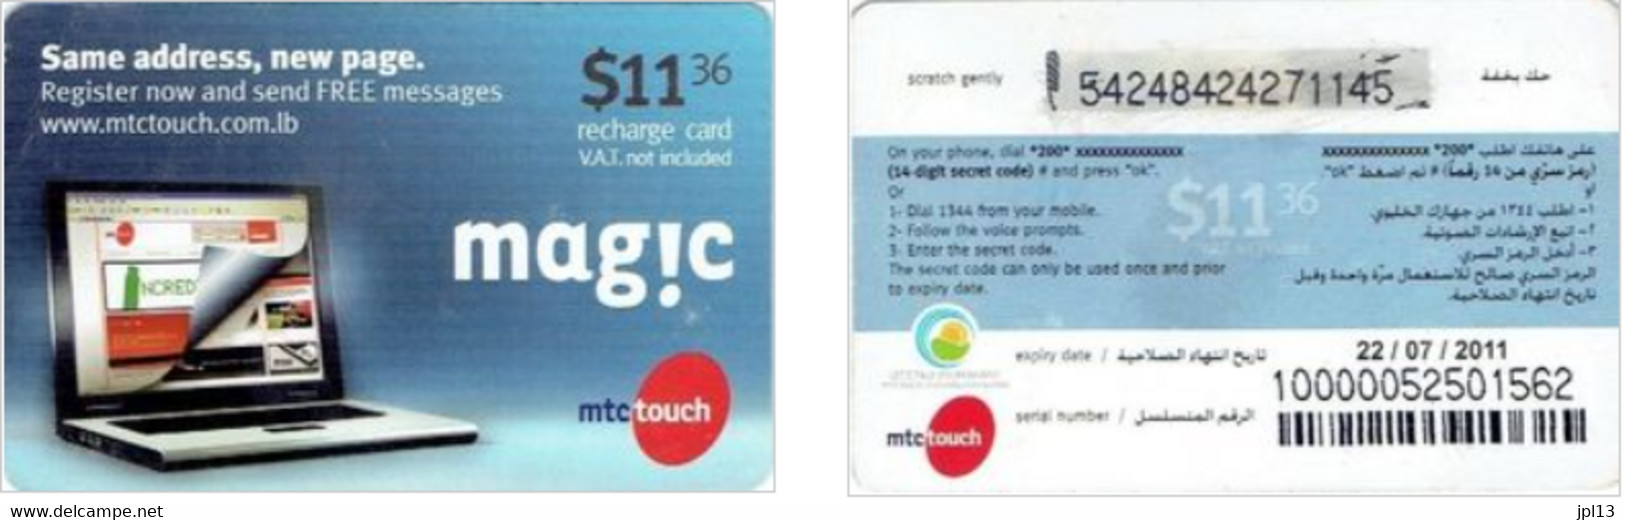 Recharge GSM - Liban - MTC Touch - Magic - Computer $11,36, Exp. 22/09/2011 - Libanon